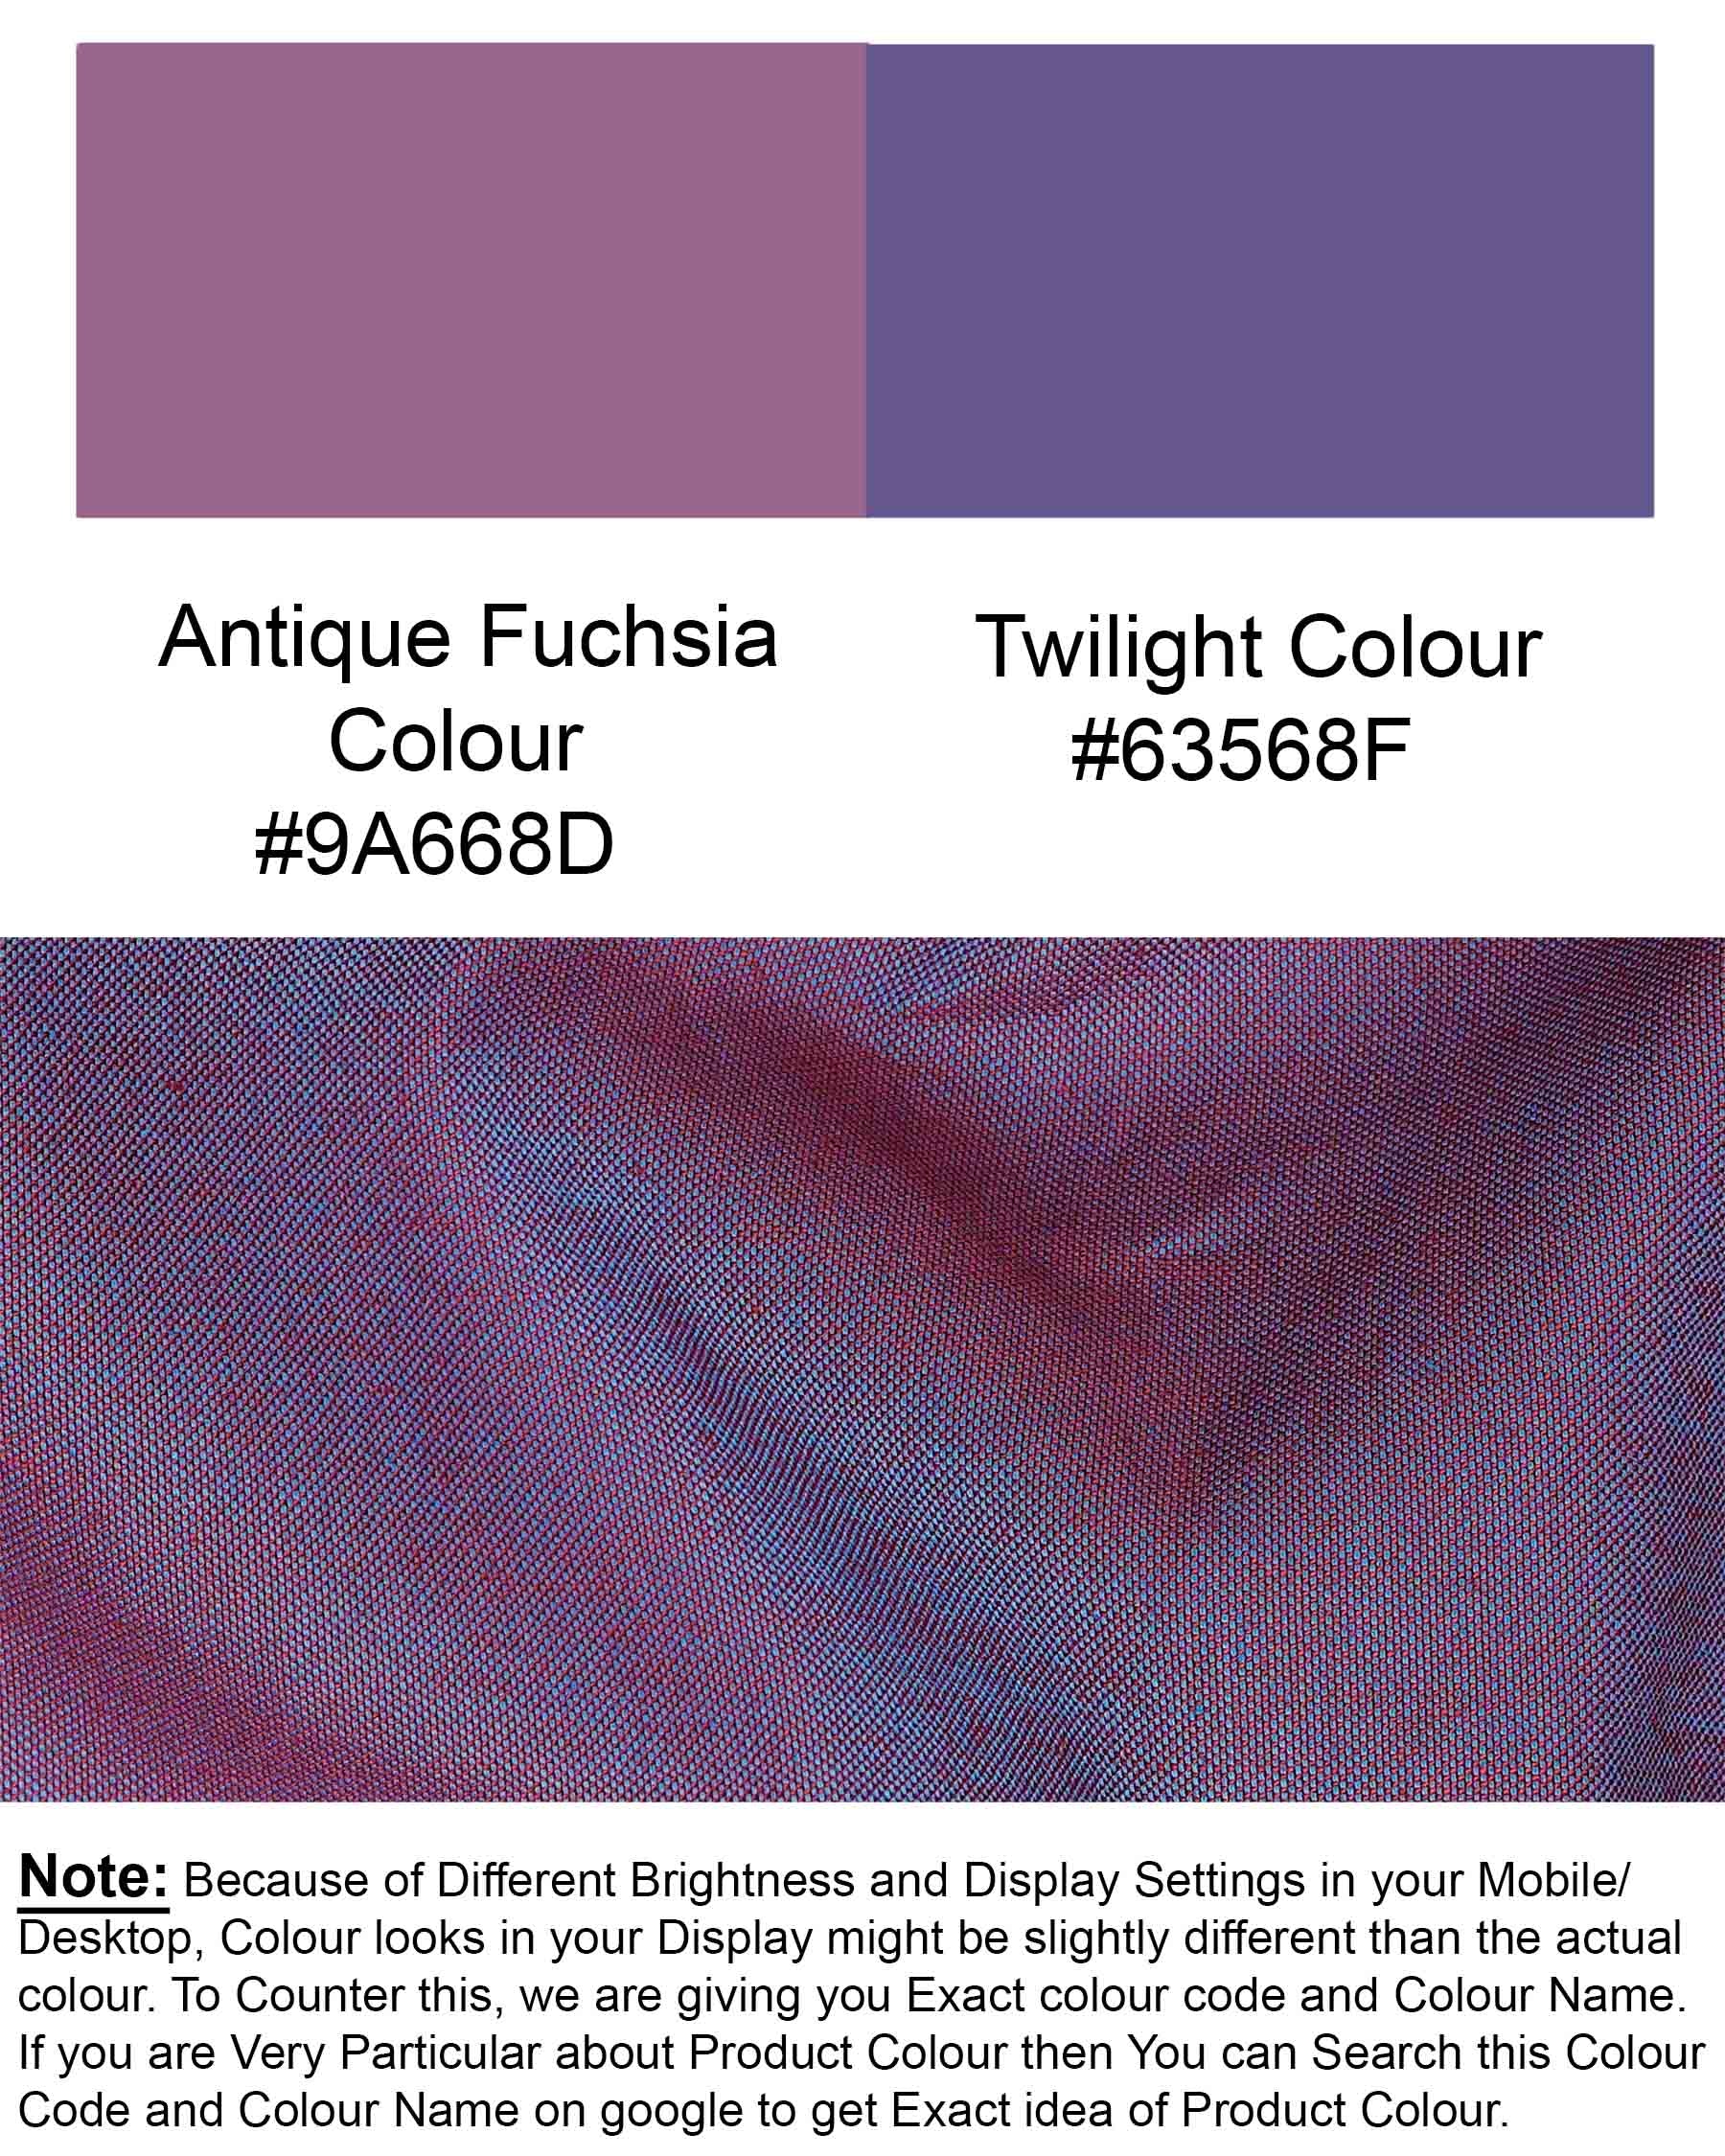 Antique Fuchsia Purple and Twilight Blue Two Tone Chambray Textured Premium Cotton Shirt 7677-CA-38, 7677-CA-H-38, 7677-CA-39,7677-CA-H-39, 7677-CA-40, 7677-CA-H-40, 7677-CA-42, 7677-CA-H-42, 7677-CA-44, 7677-CA-H-44, 7677-CA-46, 7677-CA-H-46, 7677-CA-48, 7677-CA-H-48, 7677-CA-50, 7677-CA-H-50, 7677-CA-52, 7677-CA-H-52